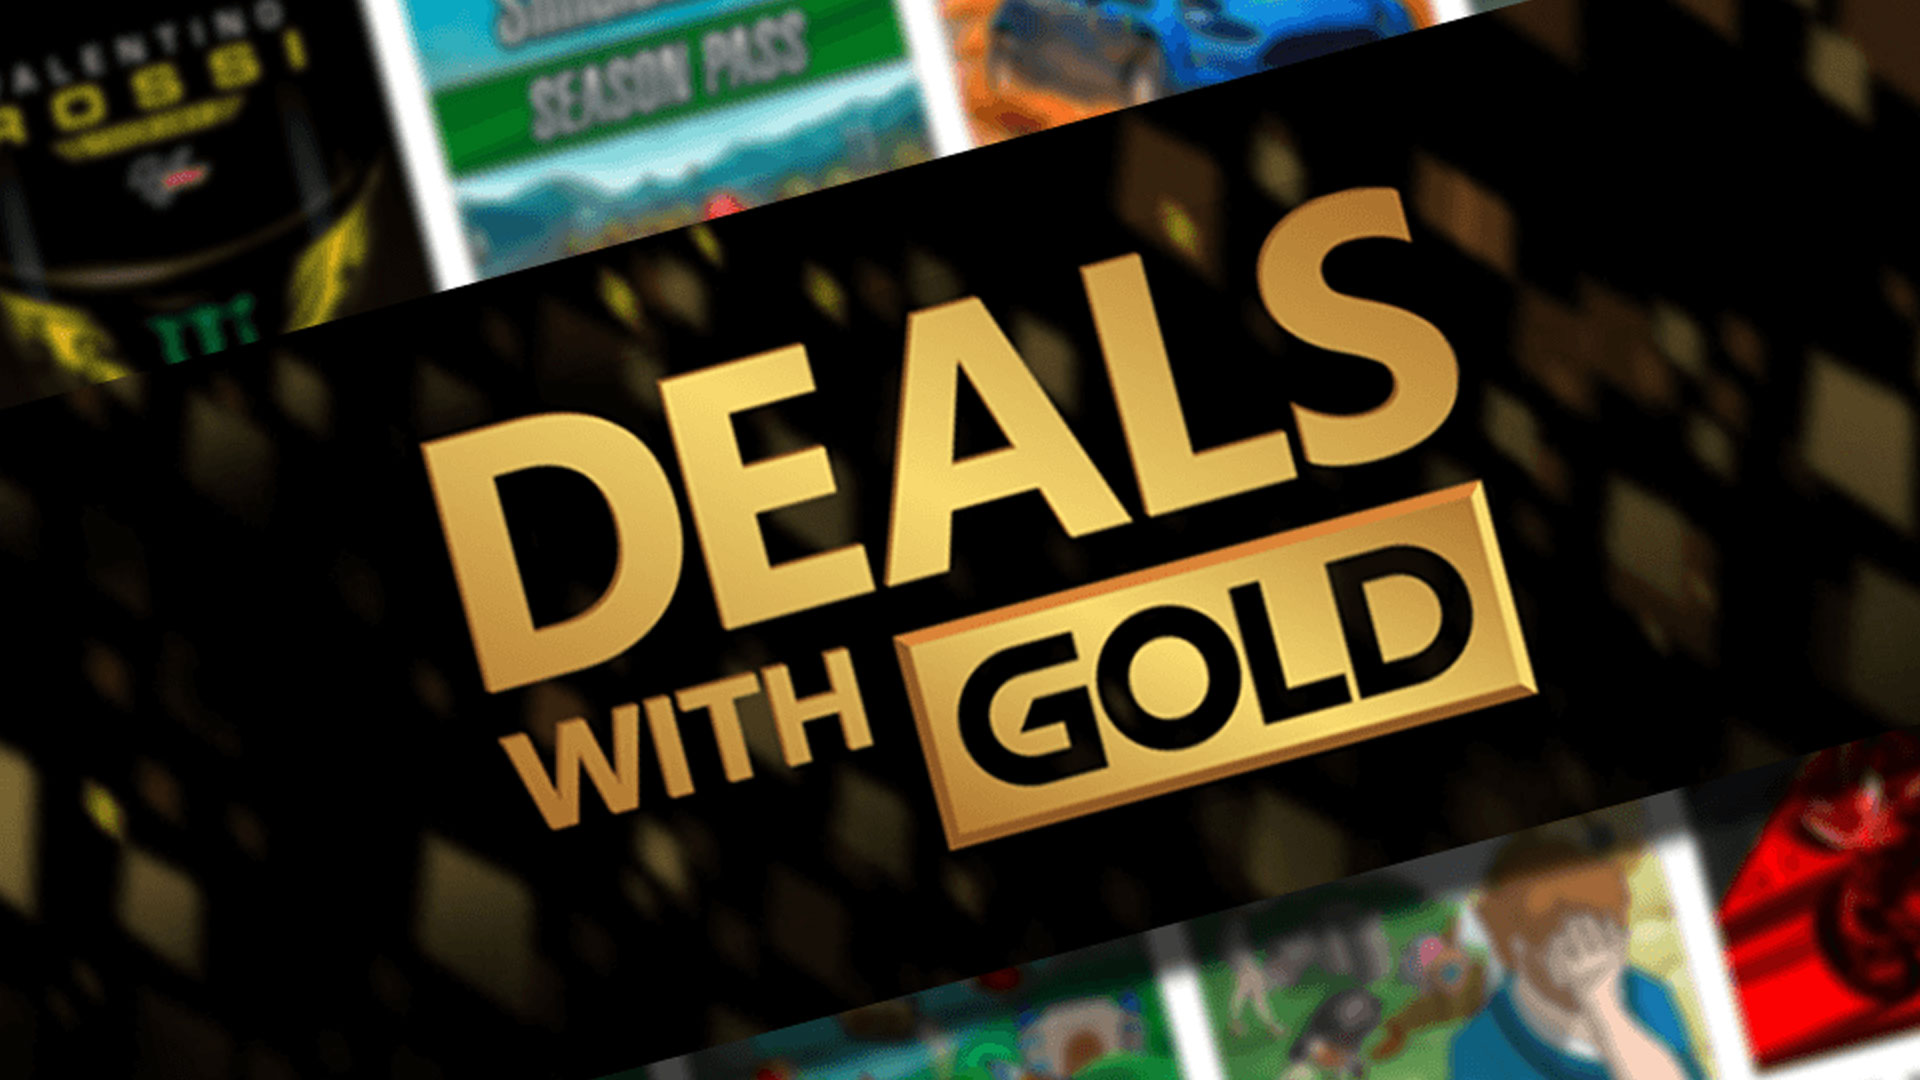 Xbox deals with Gold. Deals with Gold. Еженедельная распродажа Live Gold. Deal com